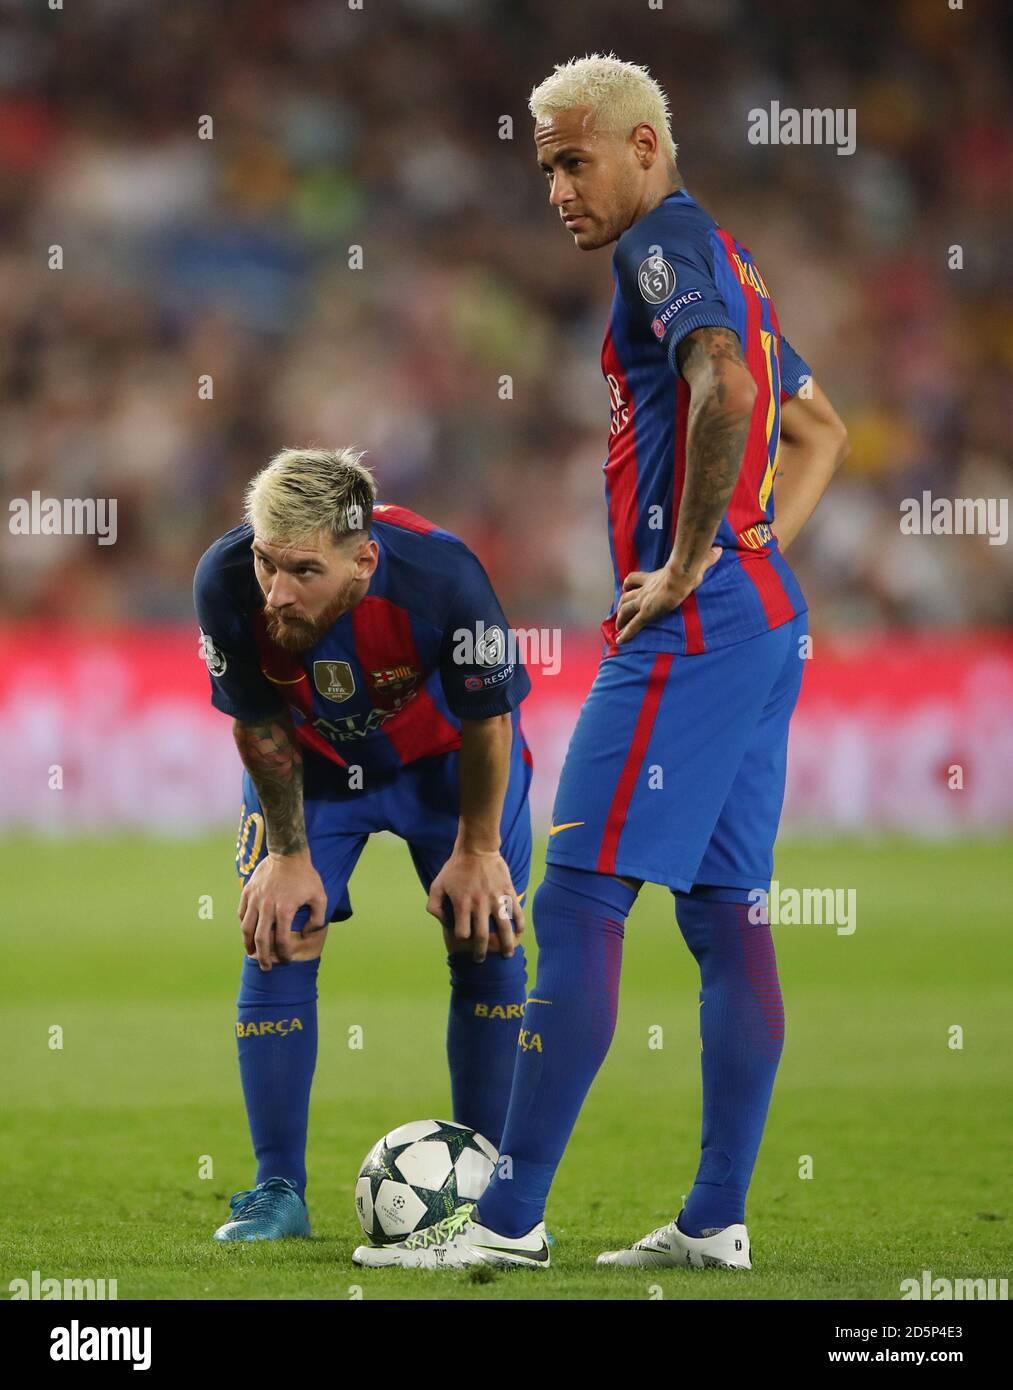 Vervormen zuiger Mellow Barcelona's Lionel Messi (left) and Junior Neymar prepare to take a free  kick Stock Photo - Alamy